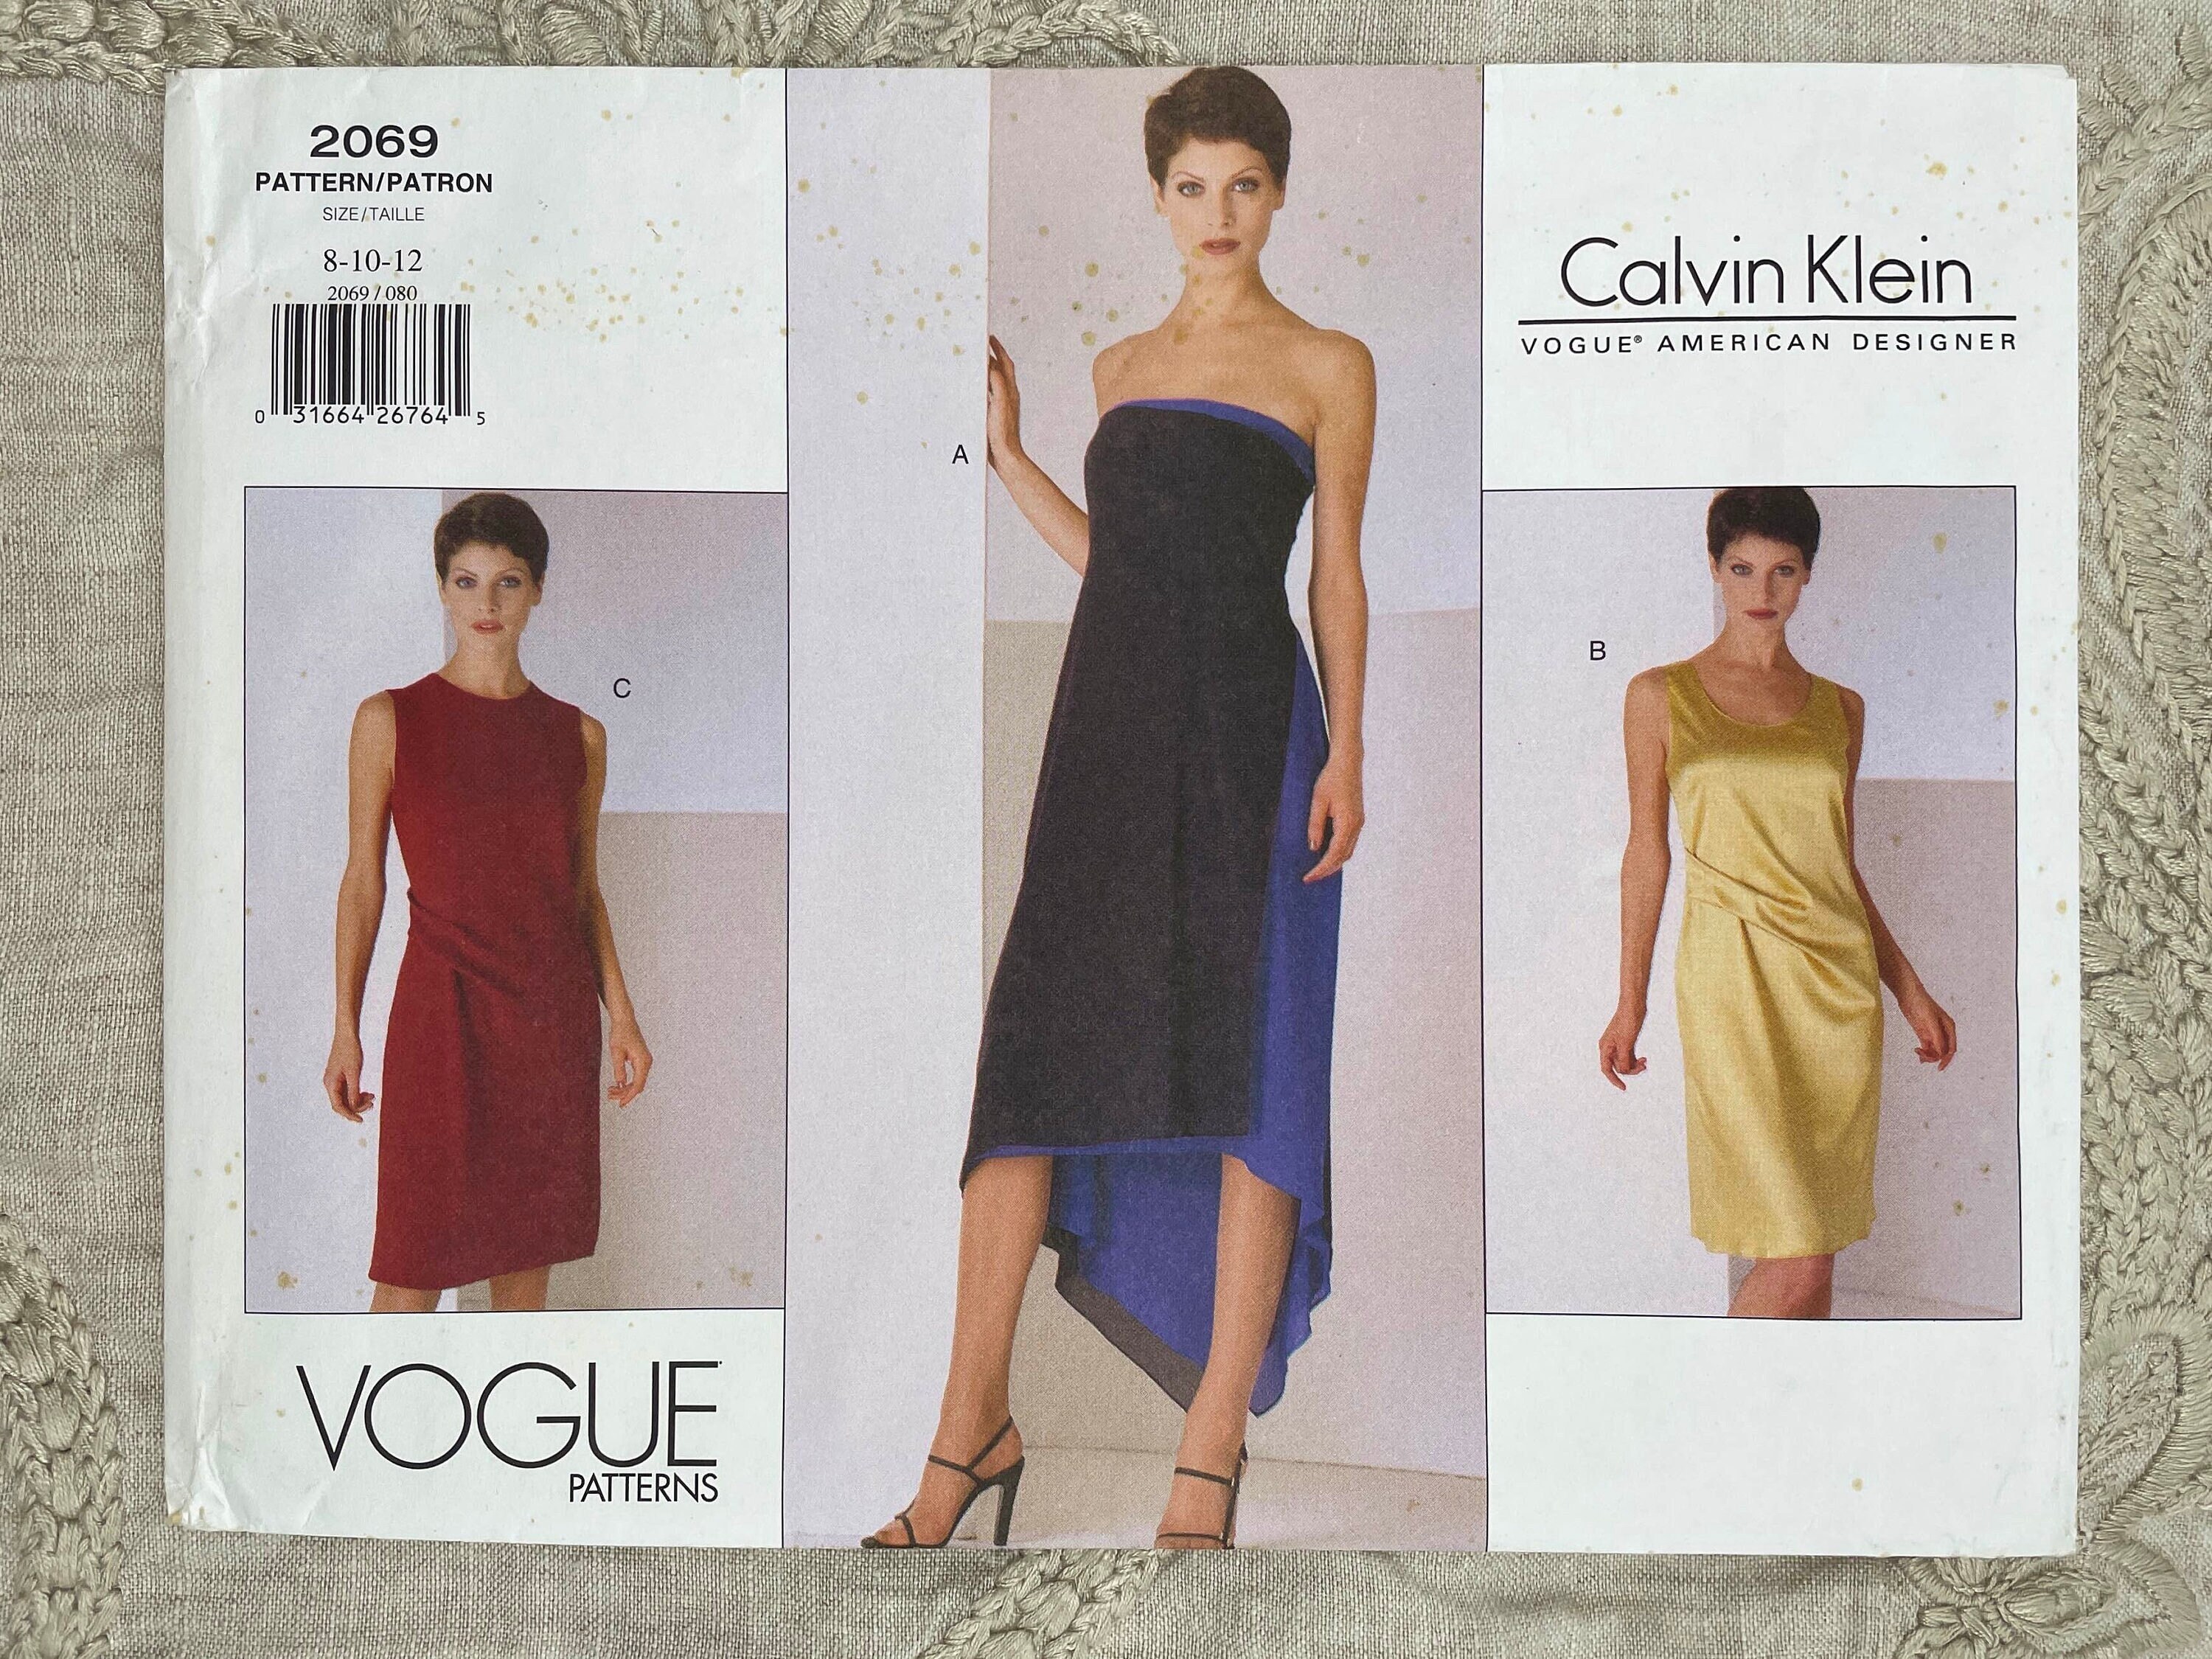 Vogue 2069 Calvin Klein 1990s Sleeveless Shaped Hemline - Etsy Ireland